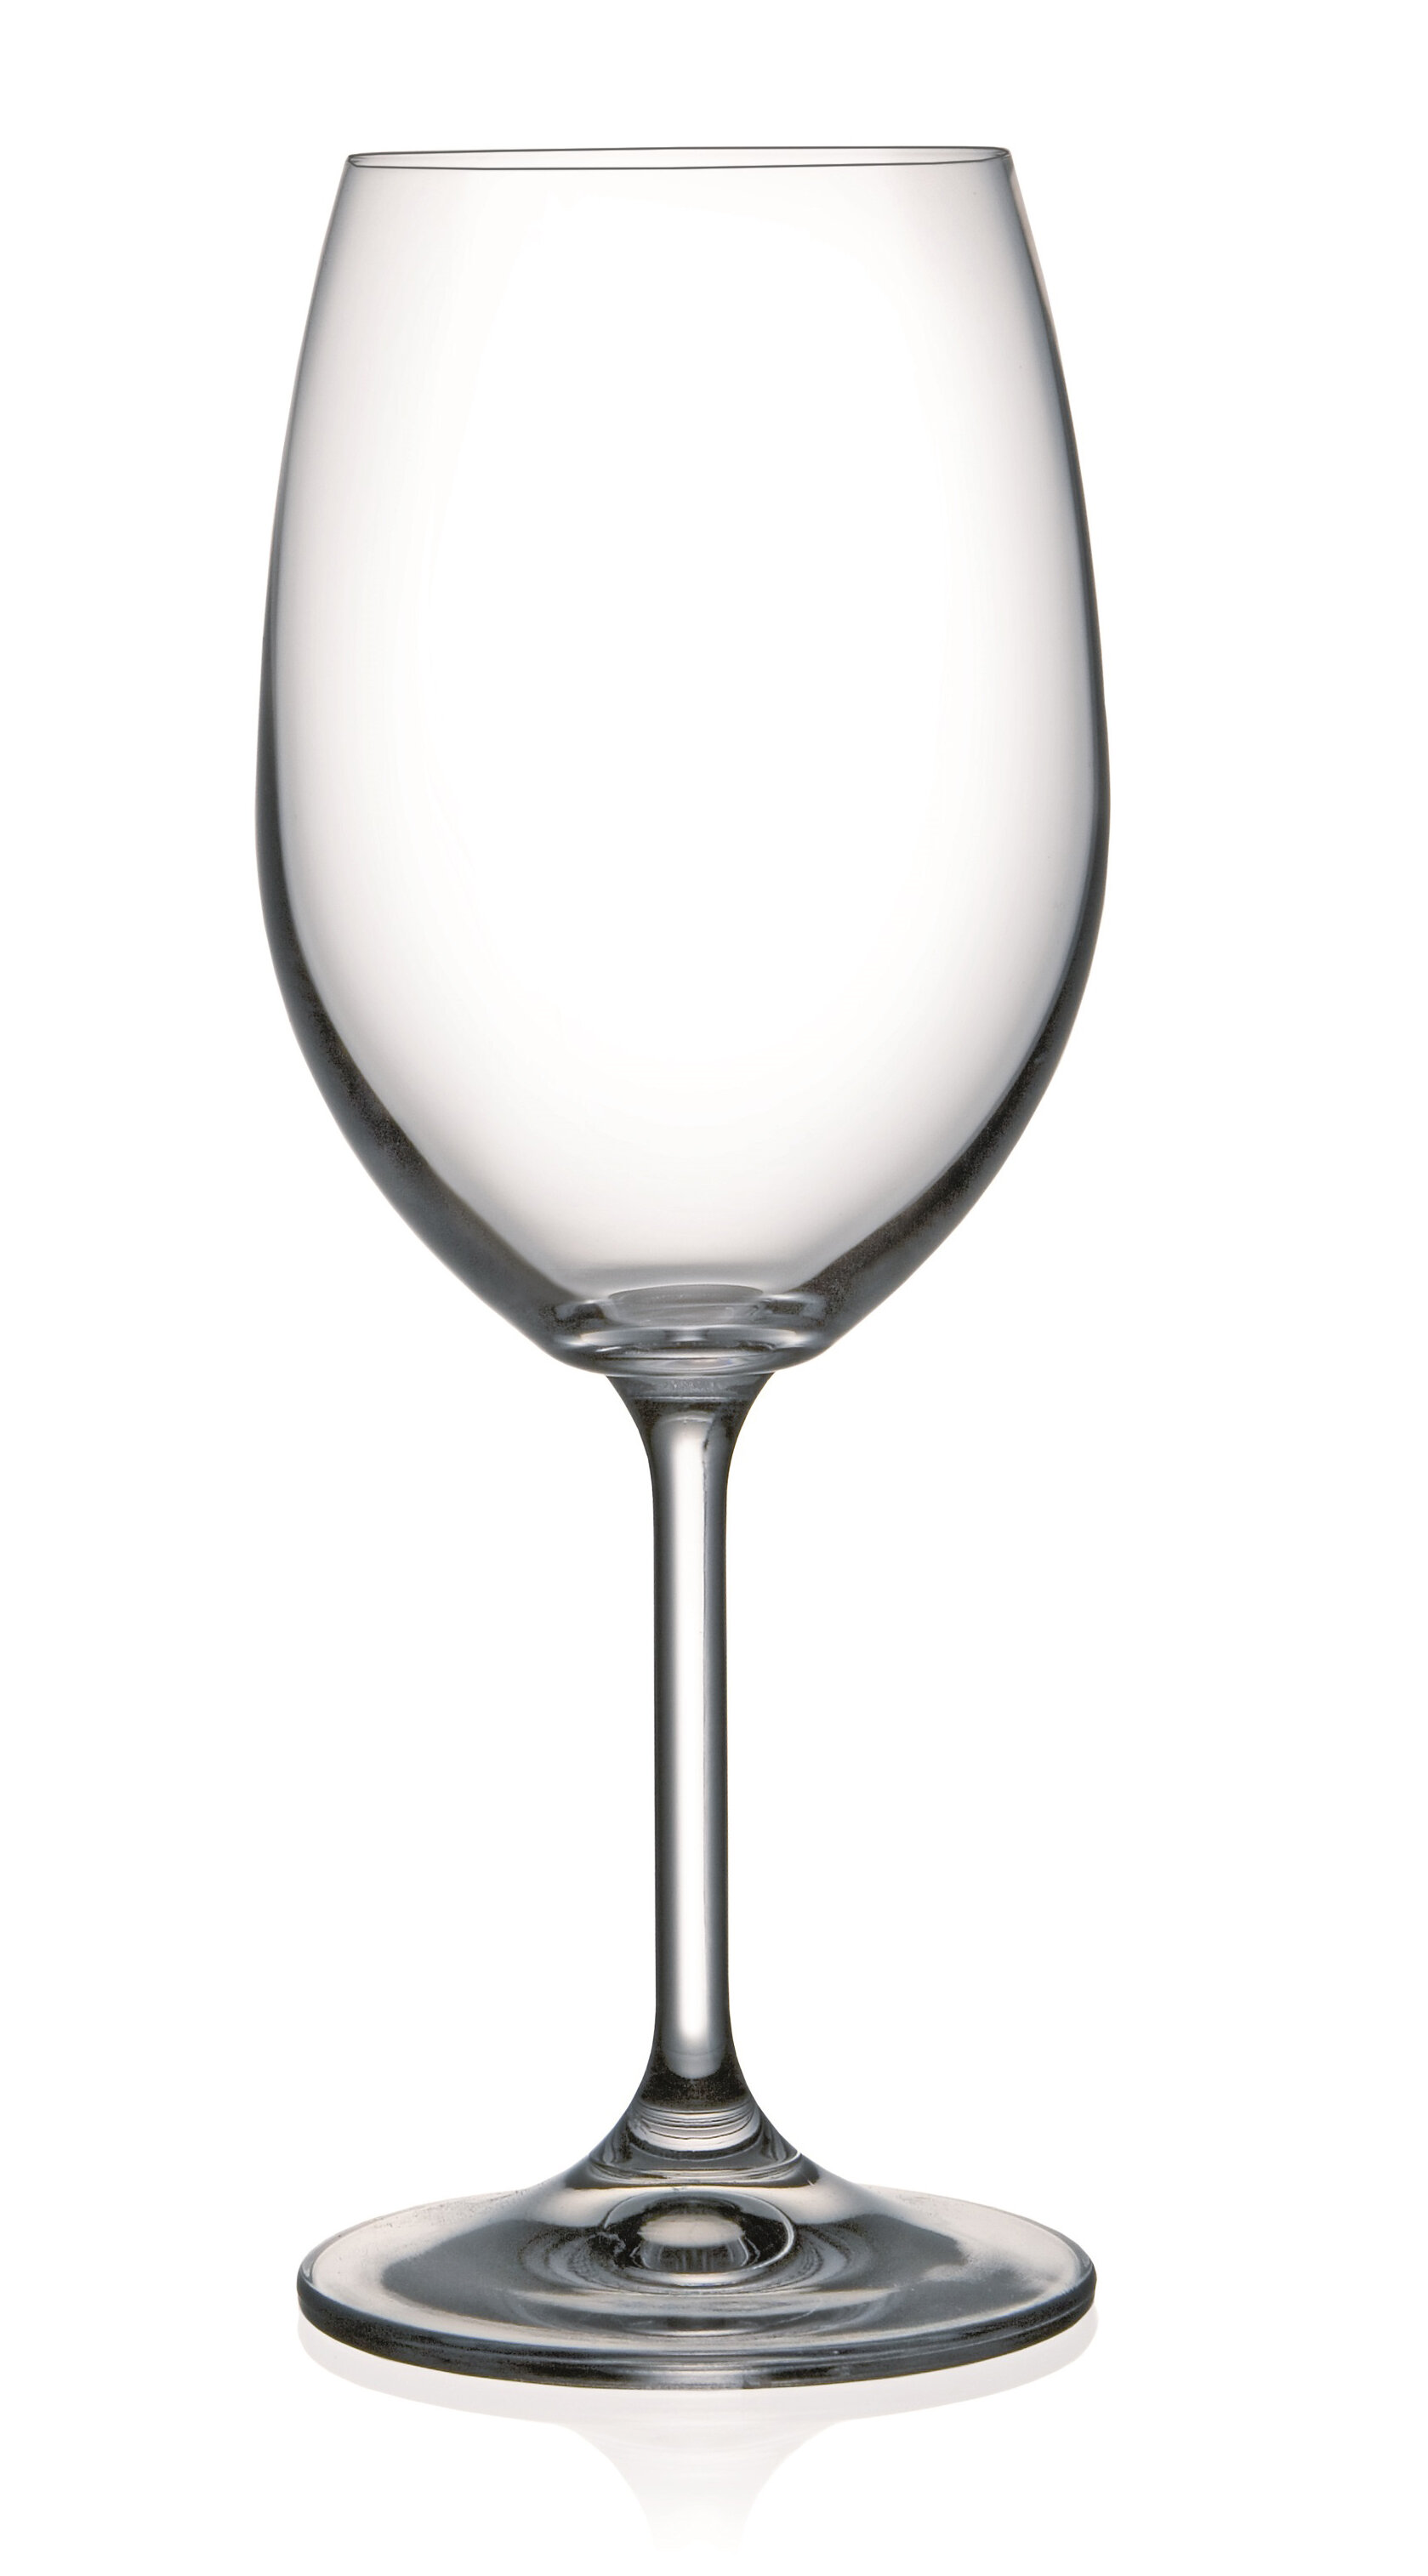 Alcott Hill® Hatherleigh 4 - Piece 16oz. Glass Glassware Set & Reviews